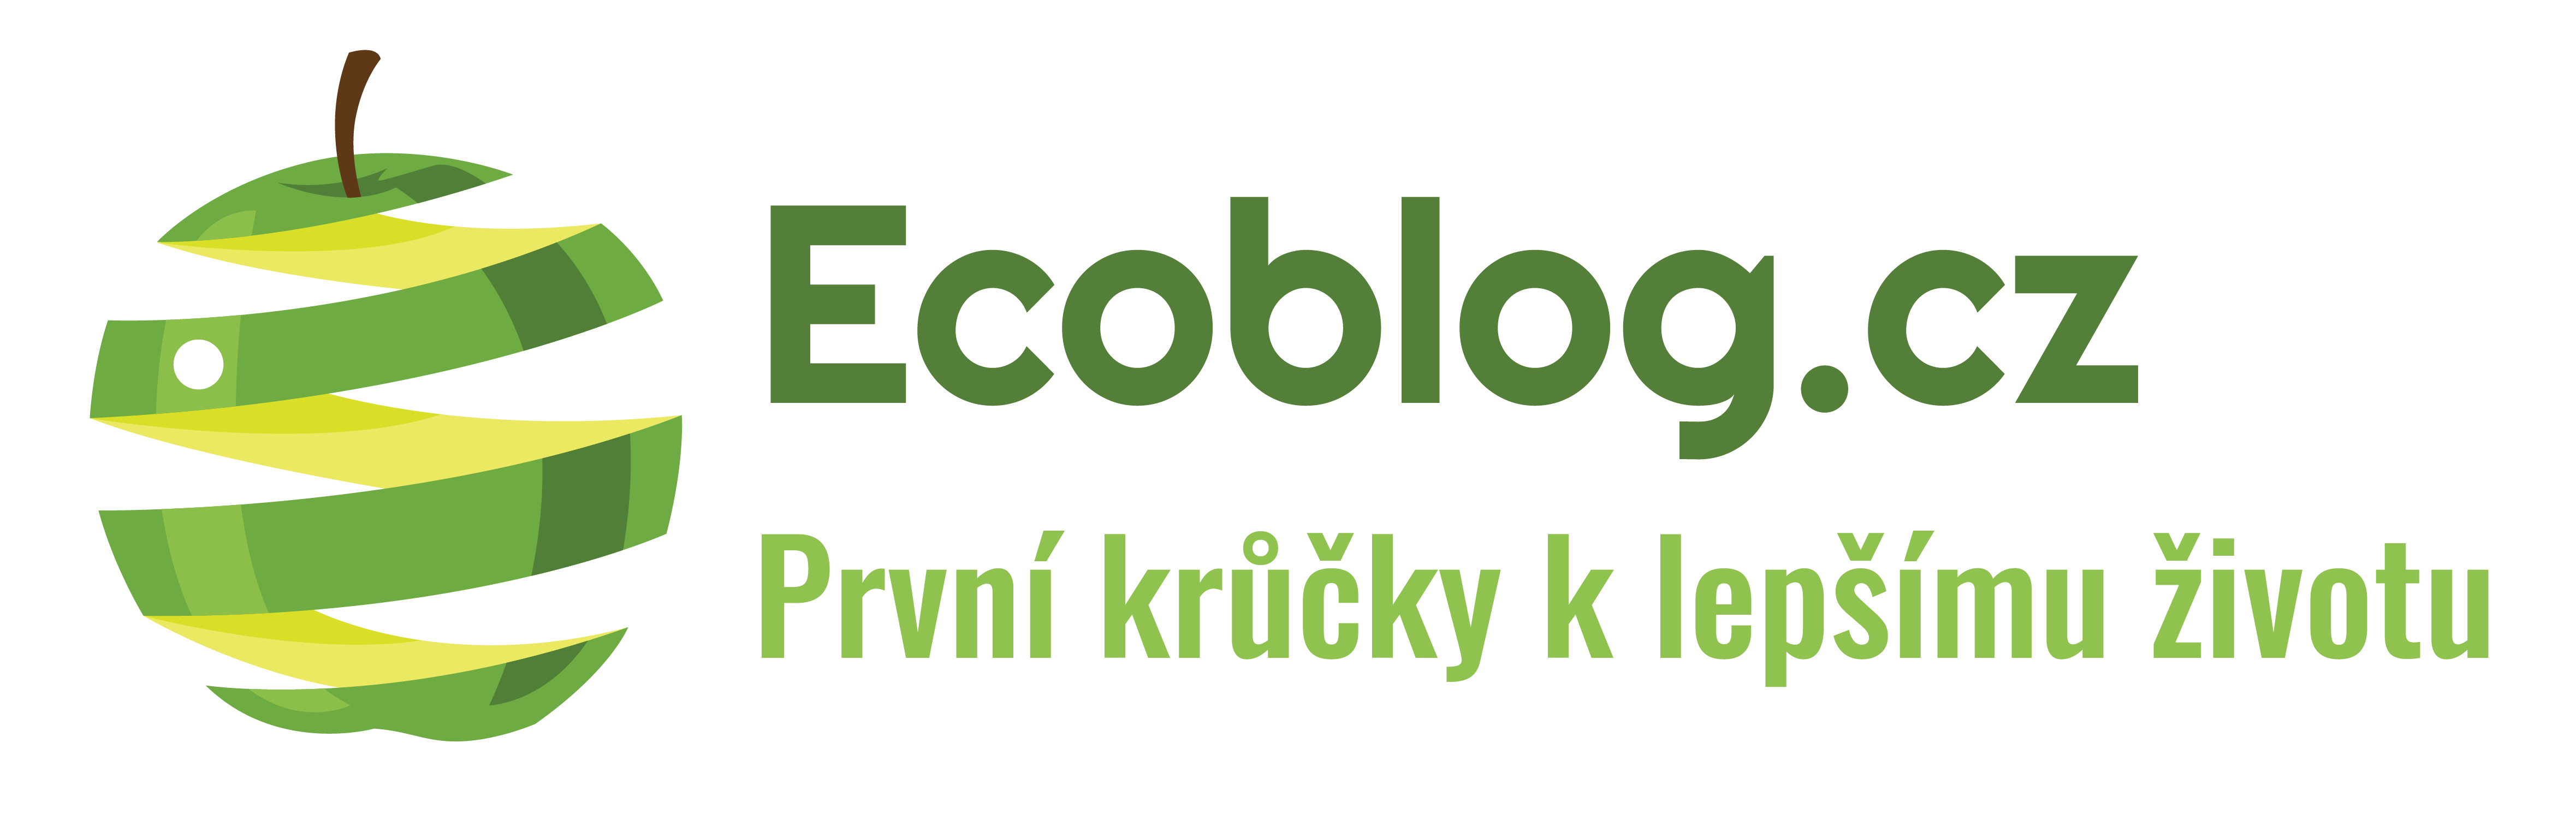 Ecoblog.cz